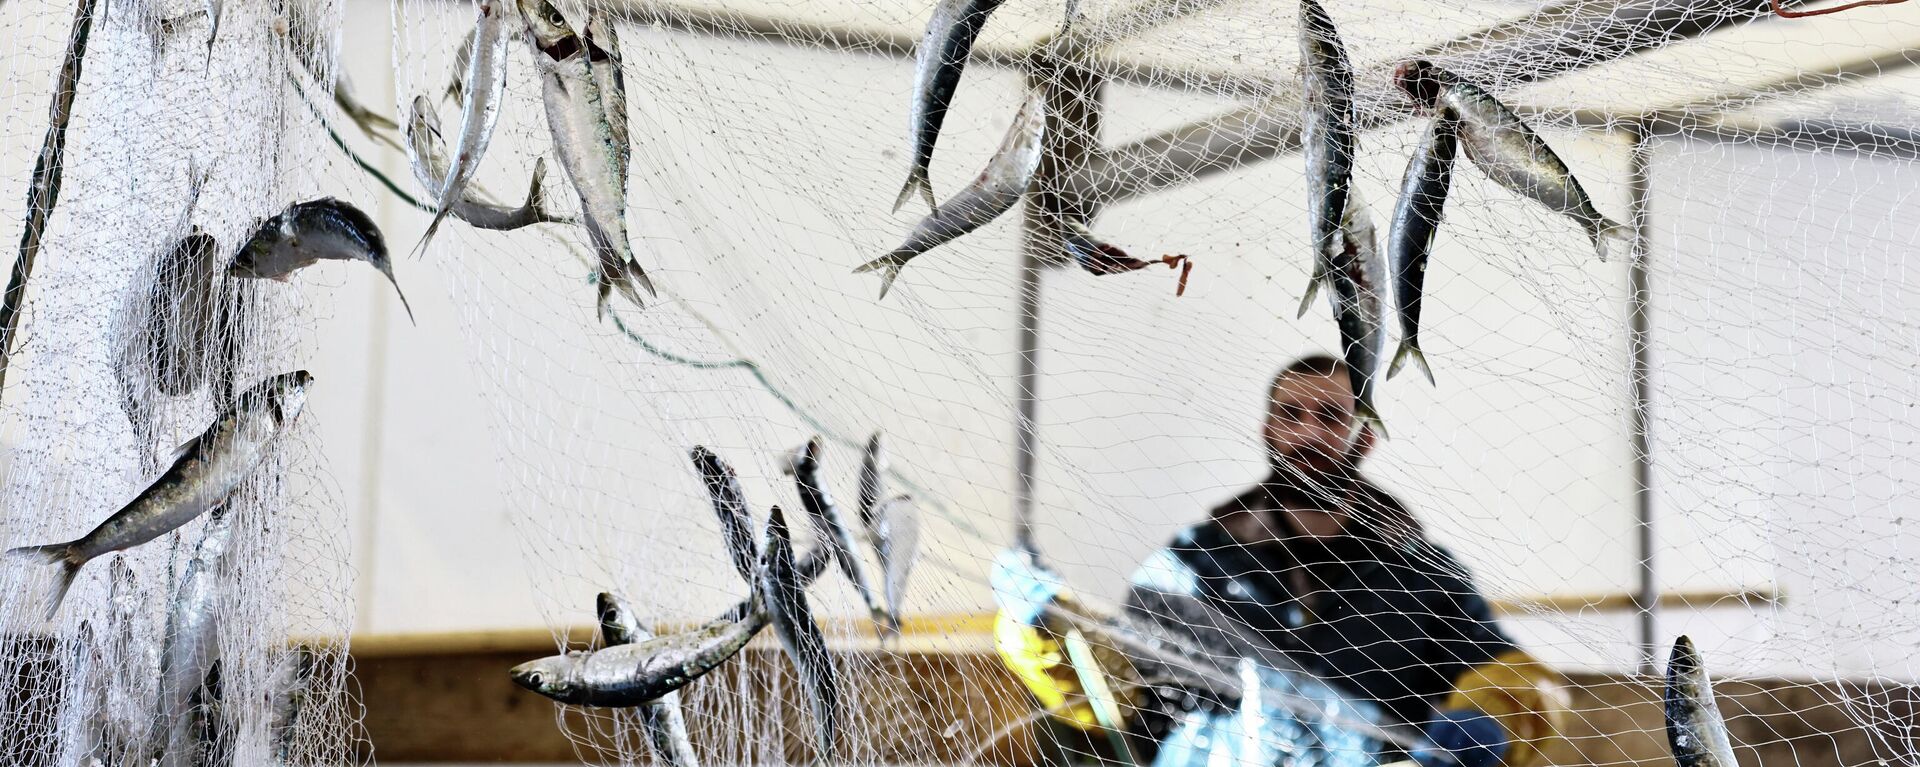 A fisherman empties a fishing net aboard the trawler Adele Camille in the port of Boulogne-sur-Mer, France, November 2, 2021 - Sputnik International, 1920, 29.11.2021